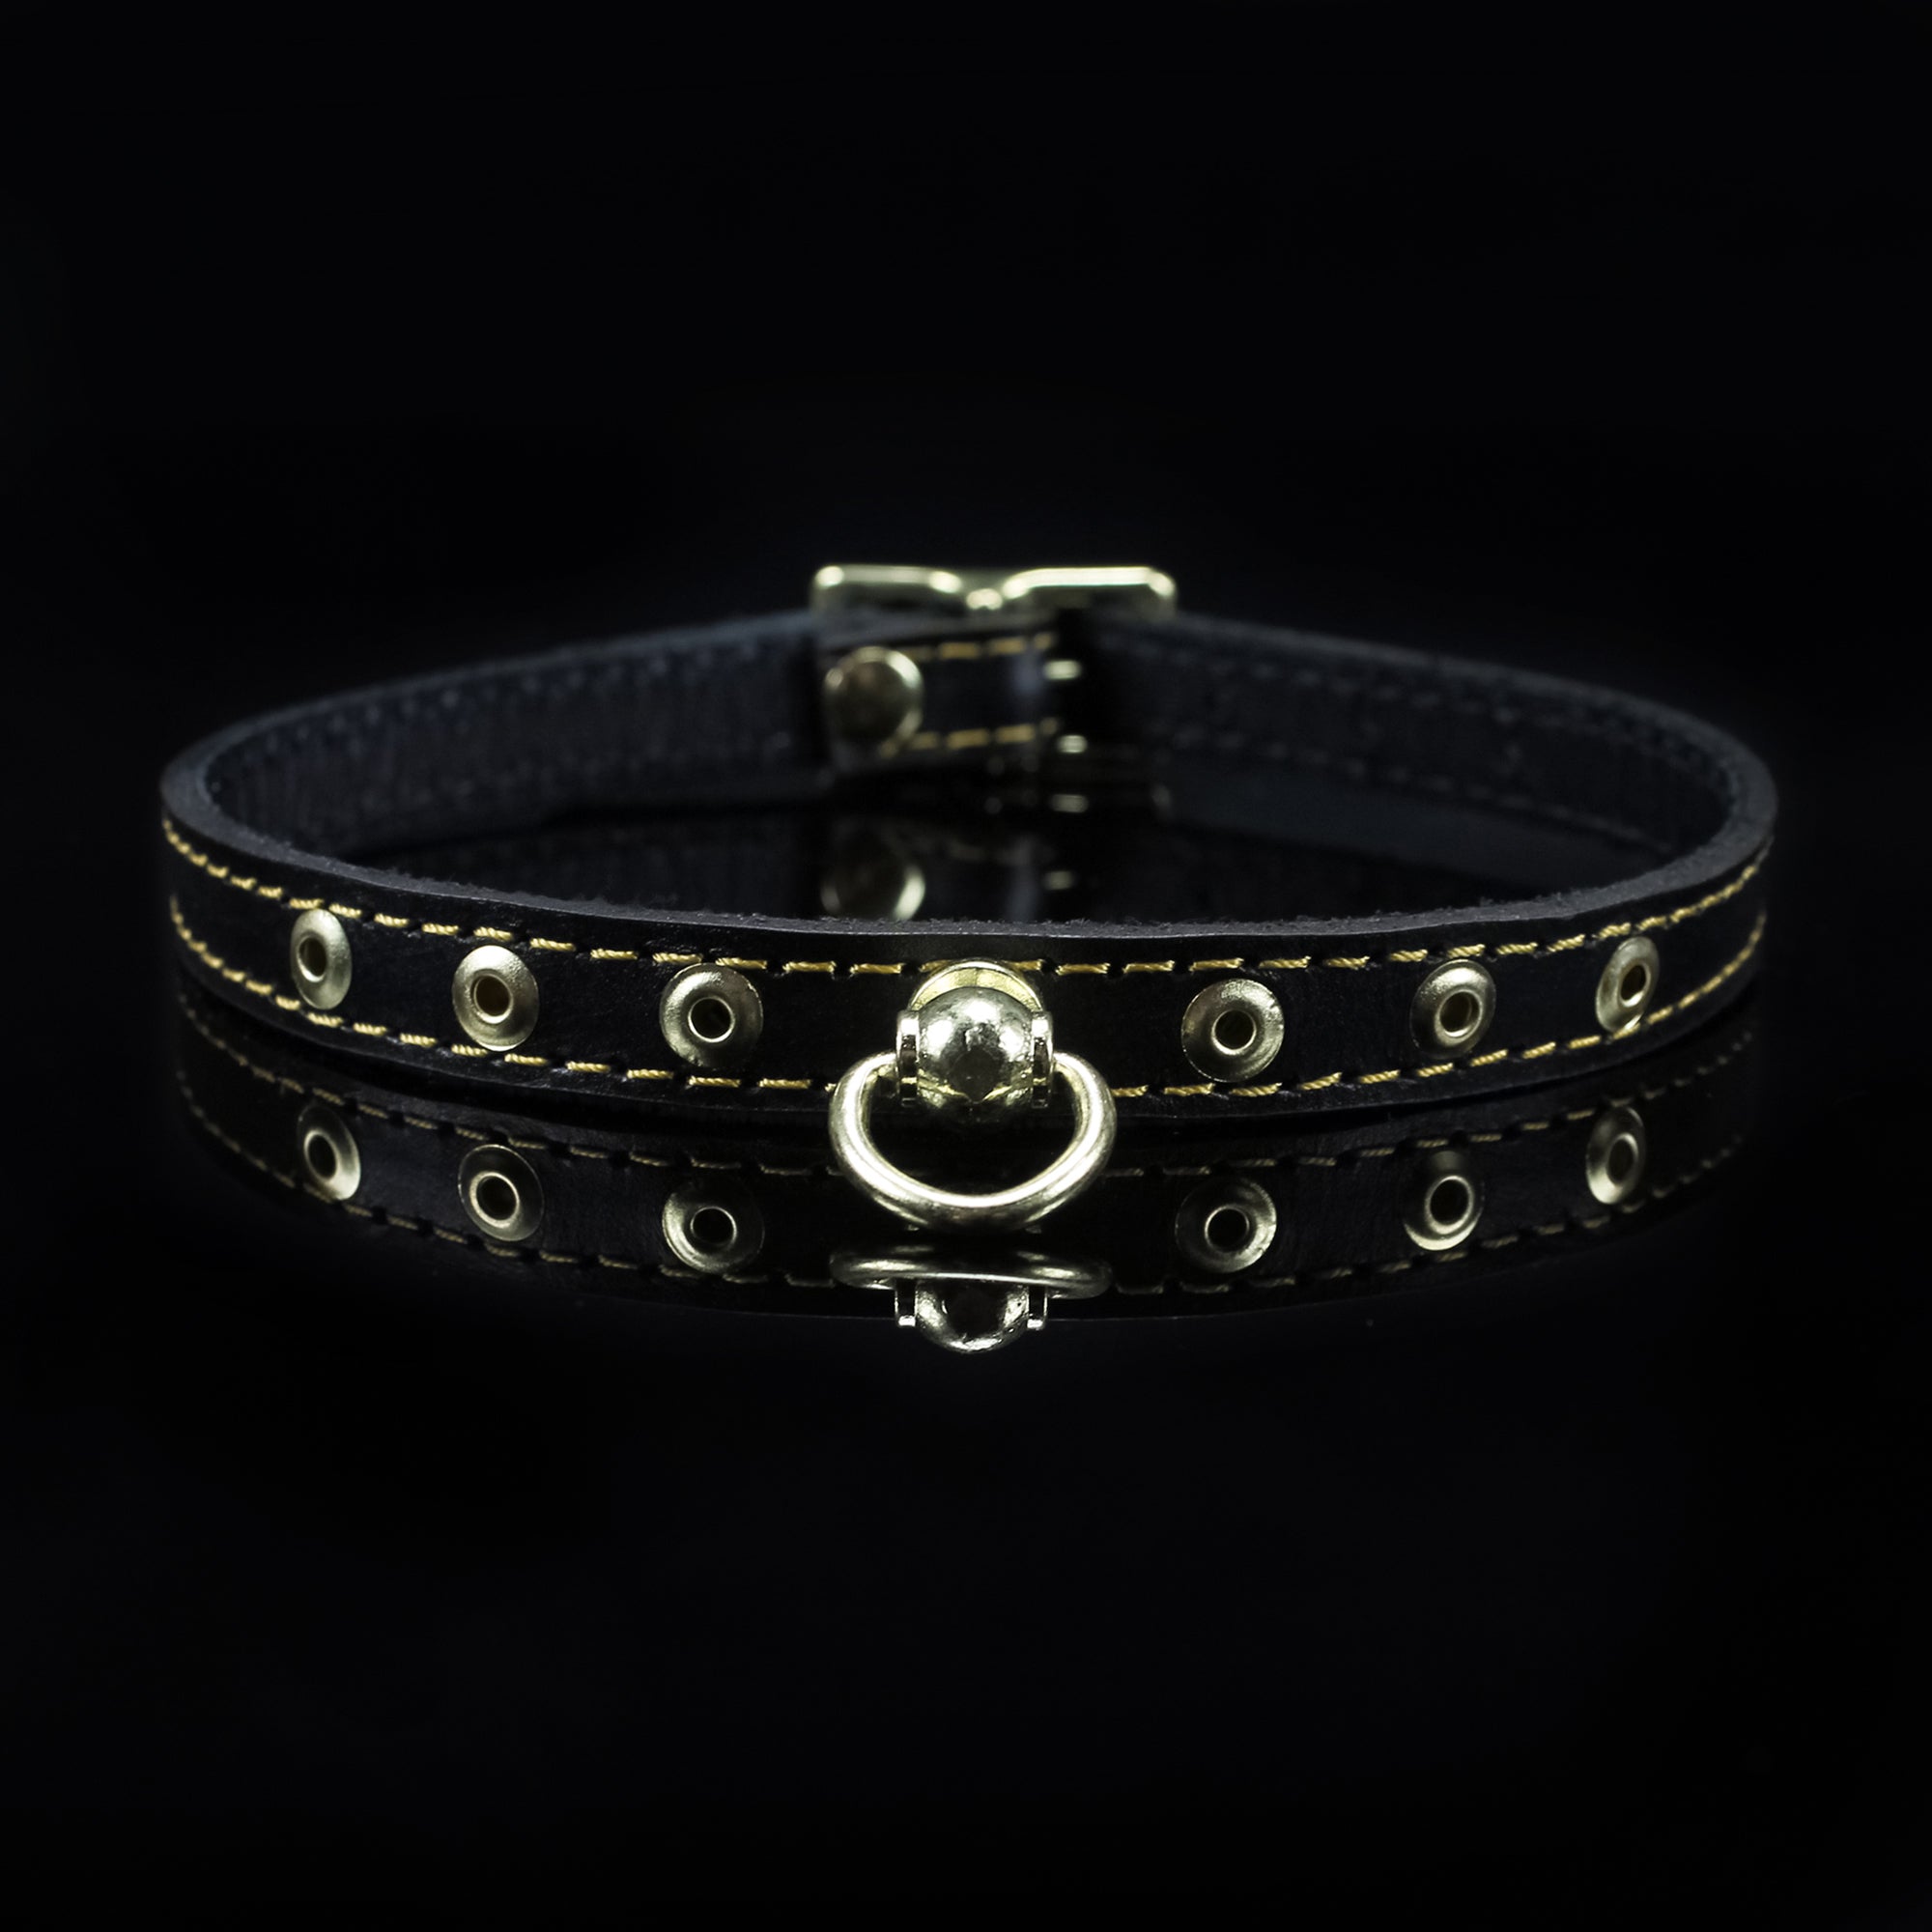 Luxury Metallic Leather Bondage Day Collar on Black